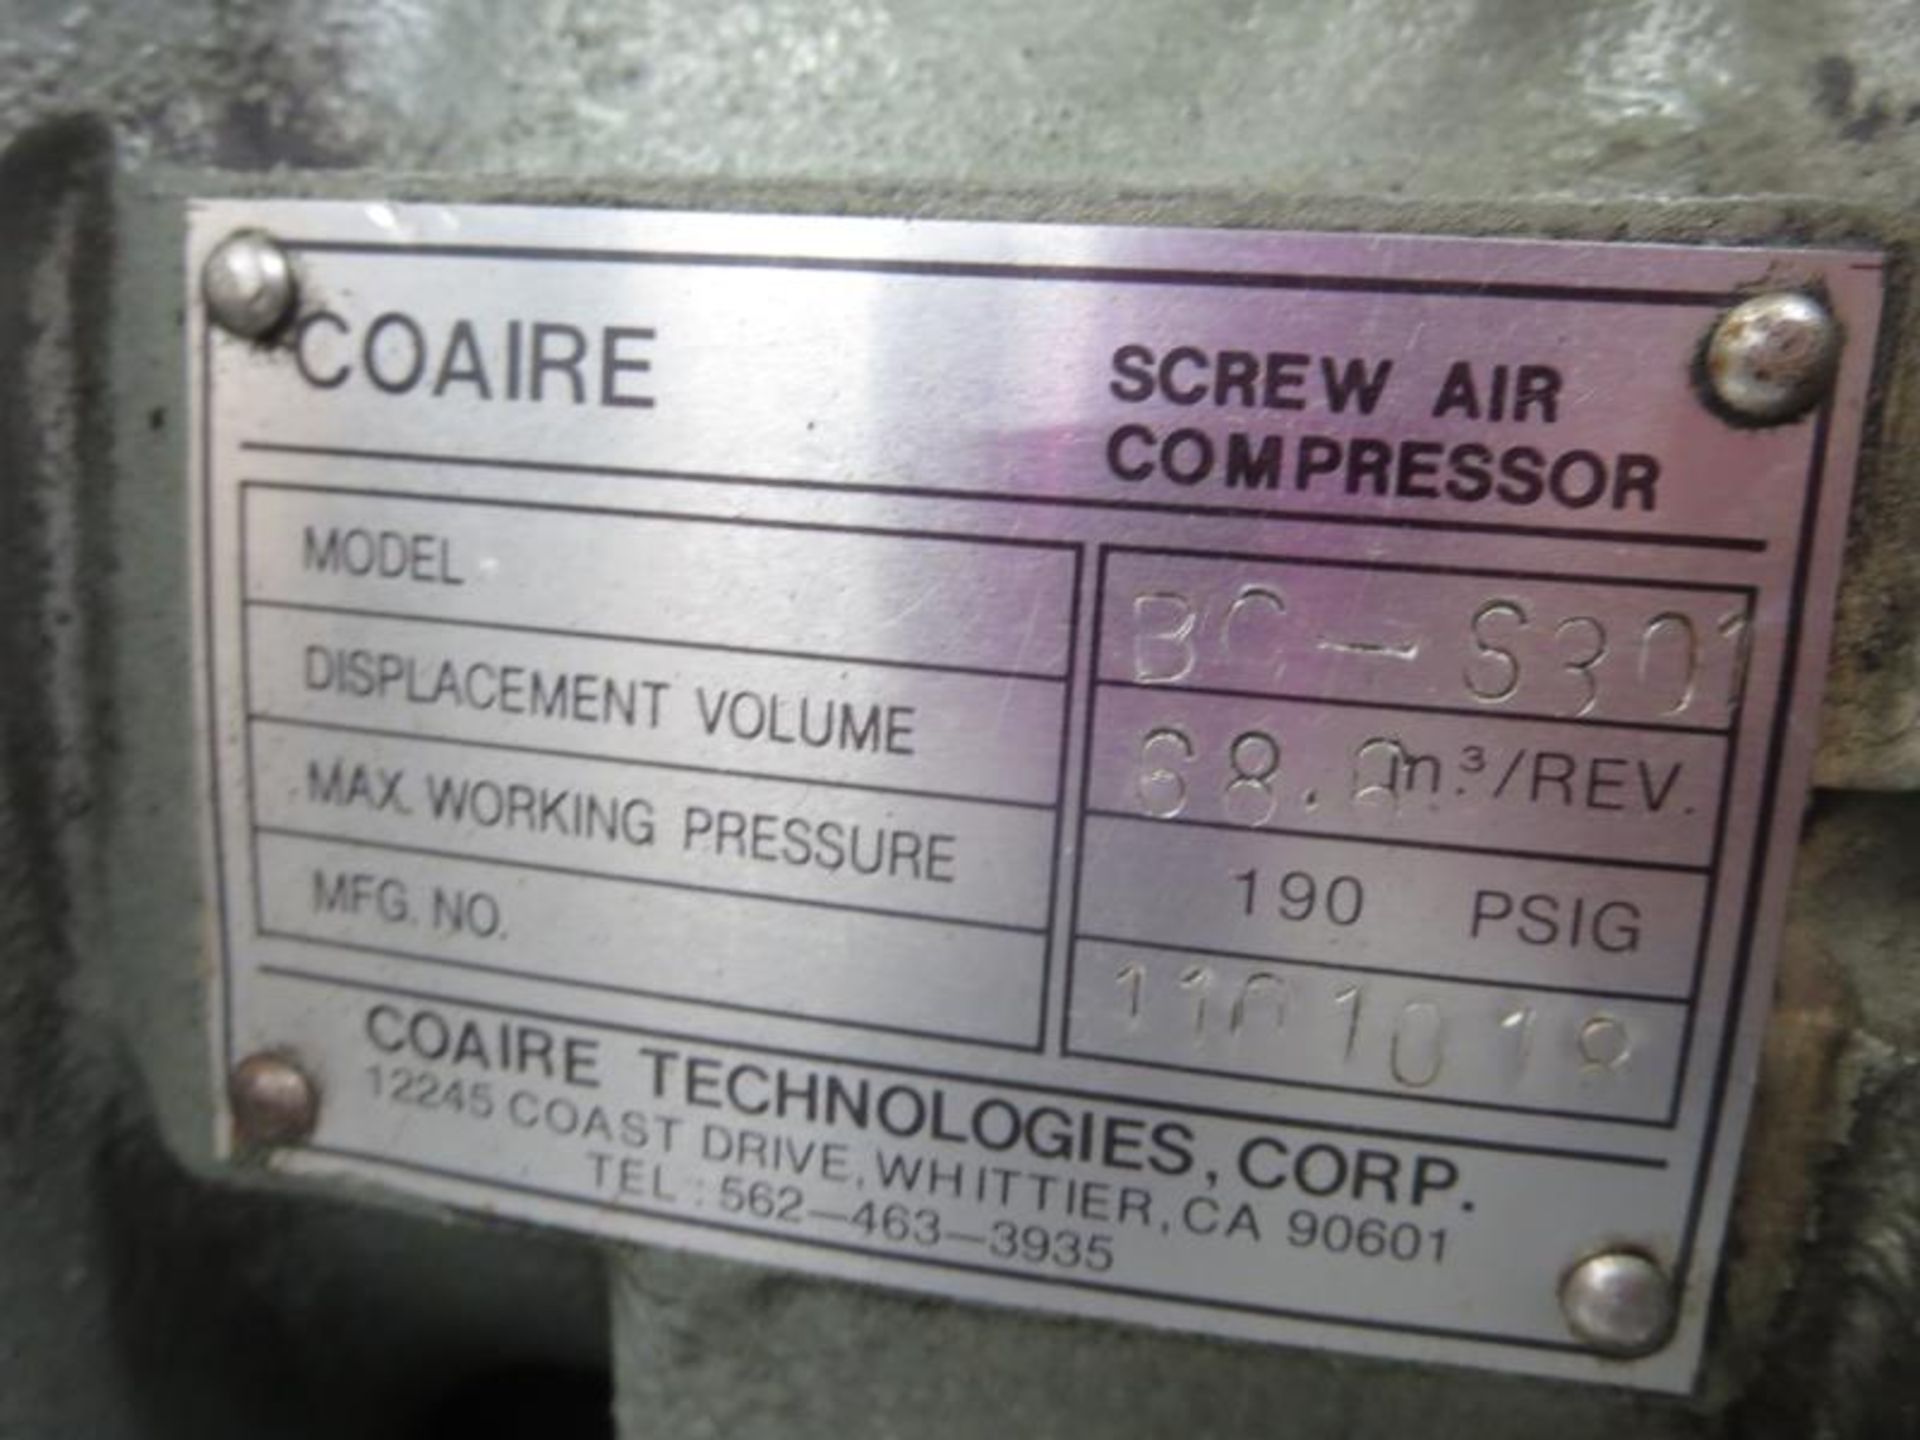 Coaire CHSA-30 30 hp Screw Air Compressor. Rotary Screw Compressor, 230v, 3 phase, Max working - Image 4 of 8